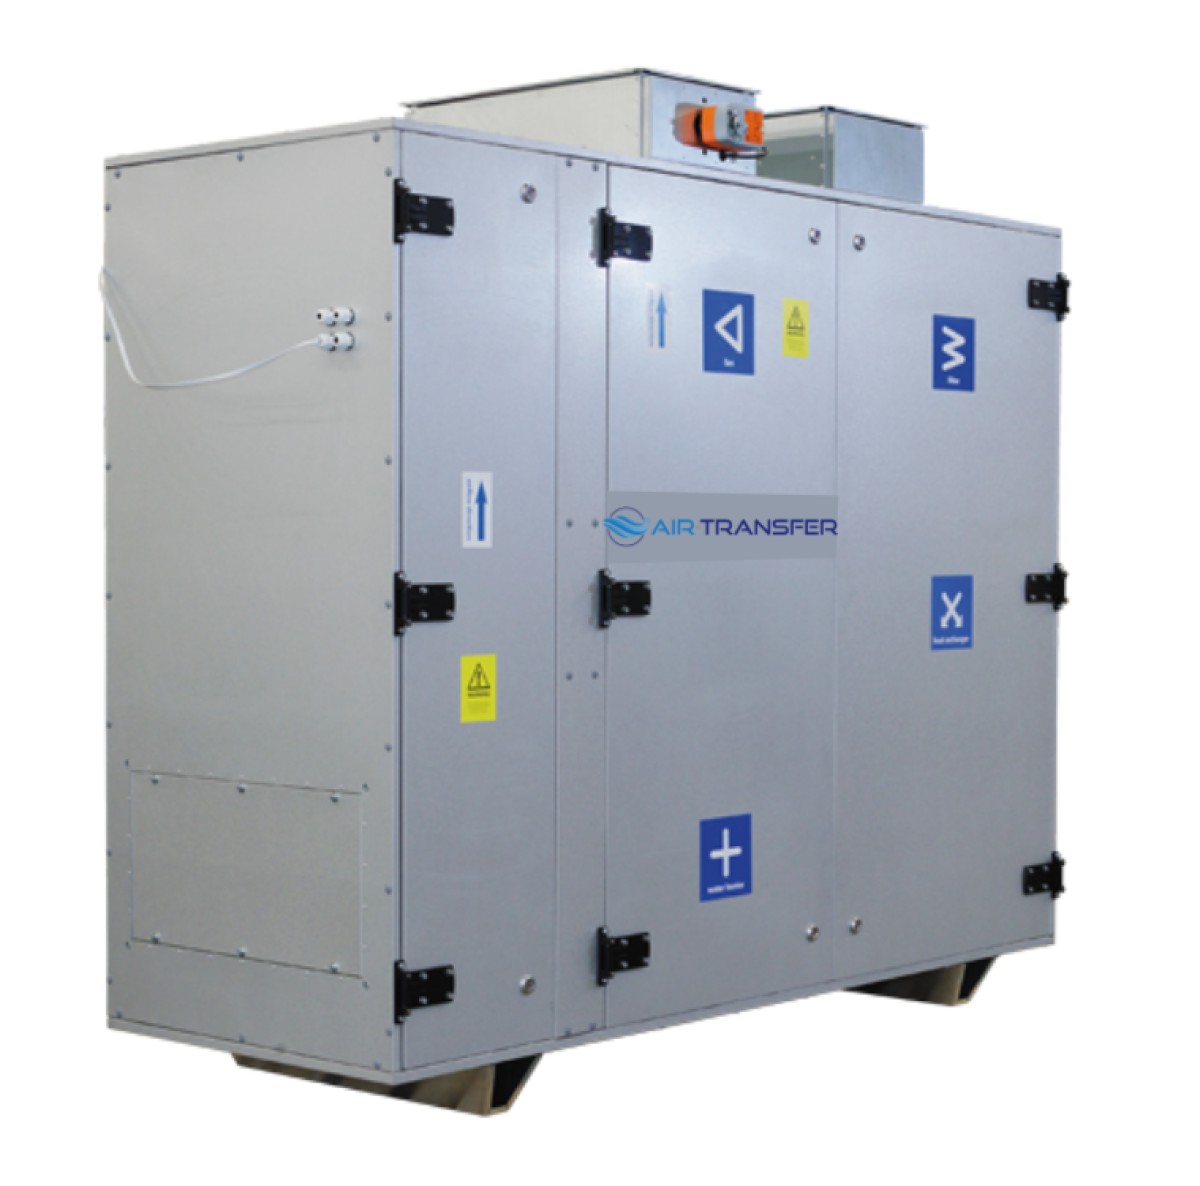 Ventilatie unit type HR WTW-6000 Compact Tot 6.000 m3/h